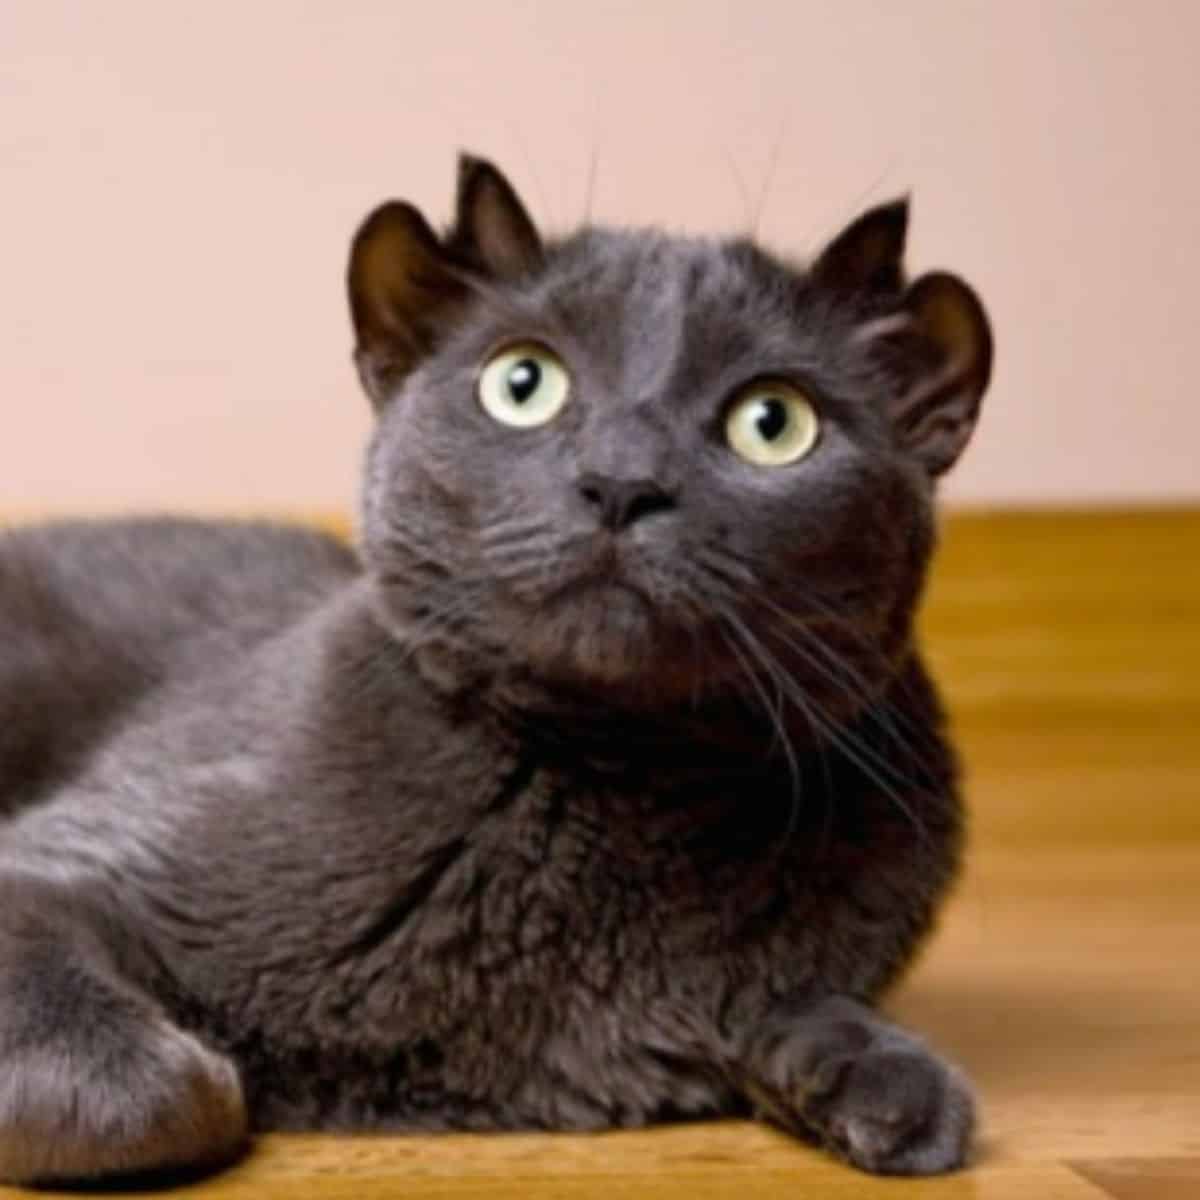 yoda,a healthy cat with four ears